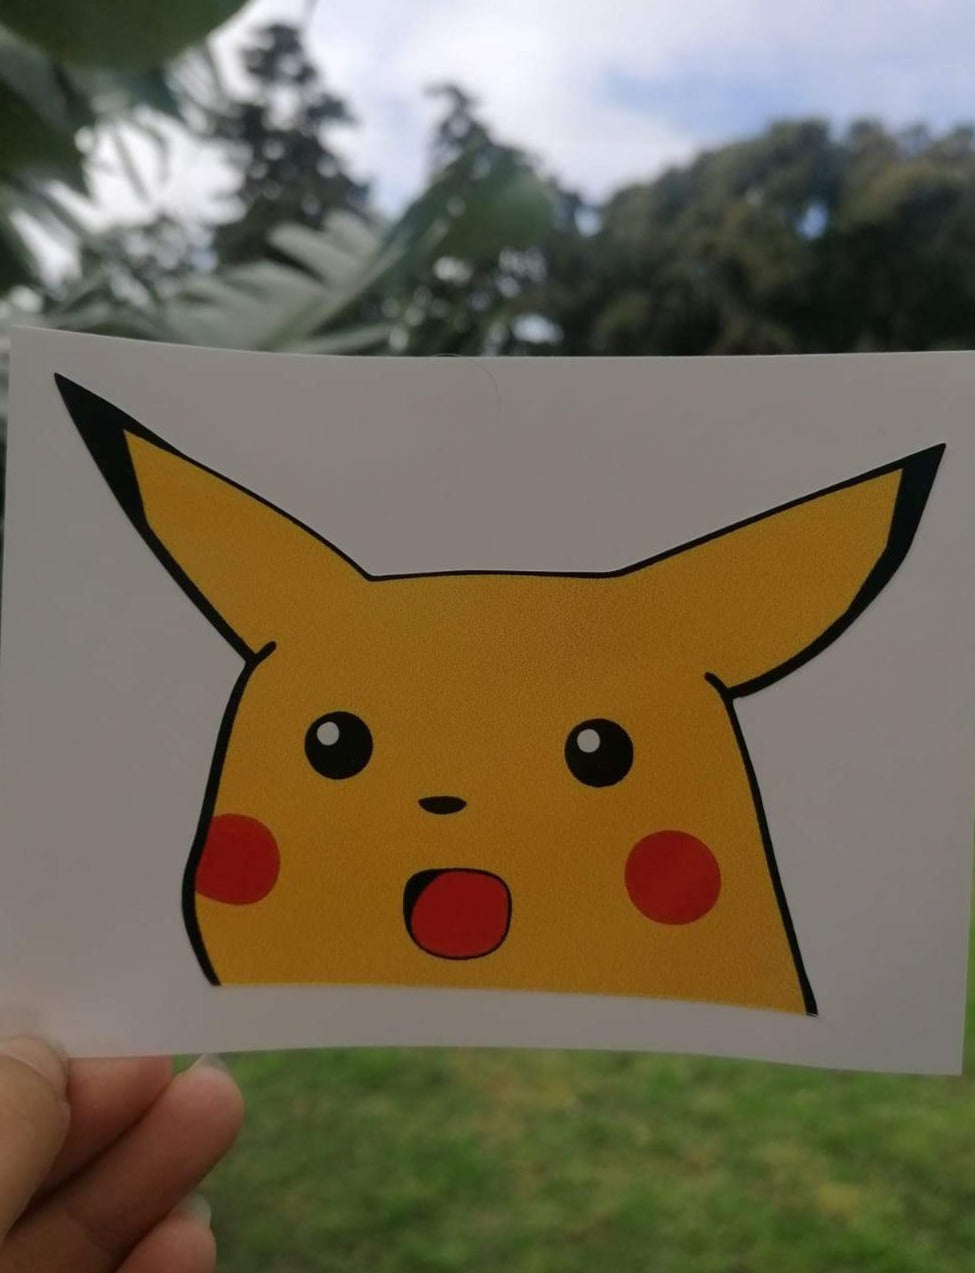 Squished Pikachu Sticker Decal - Peeker Peeper Meme Cute Funny JDM Slap Car  4x4